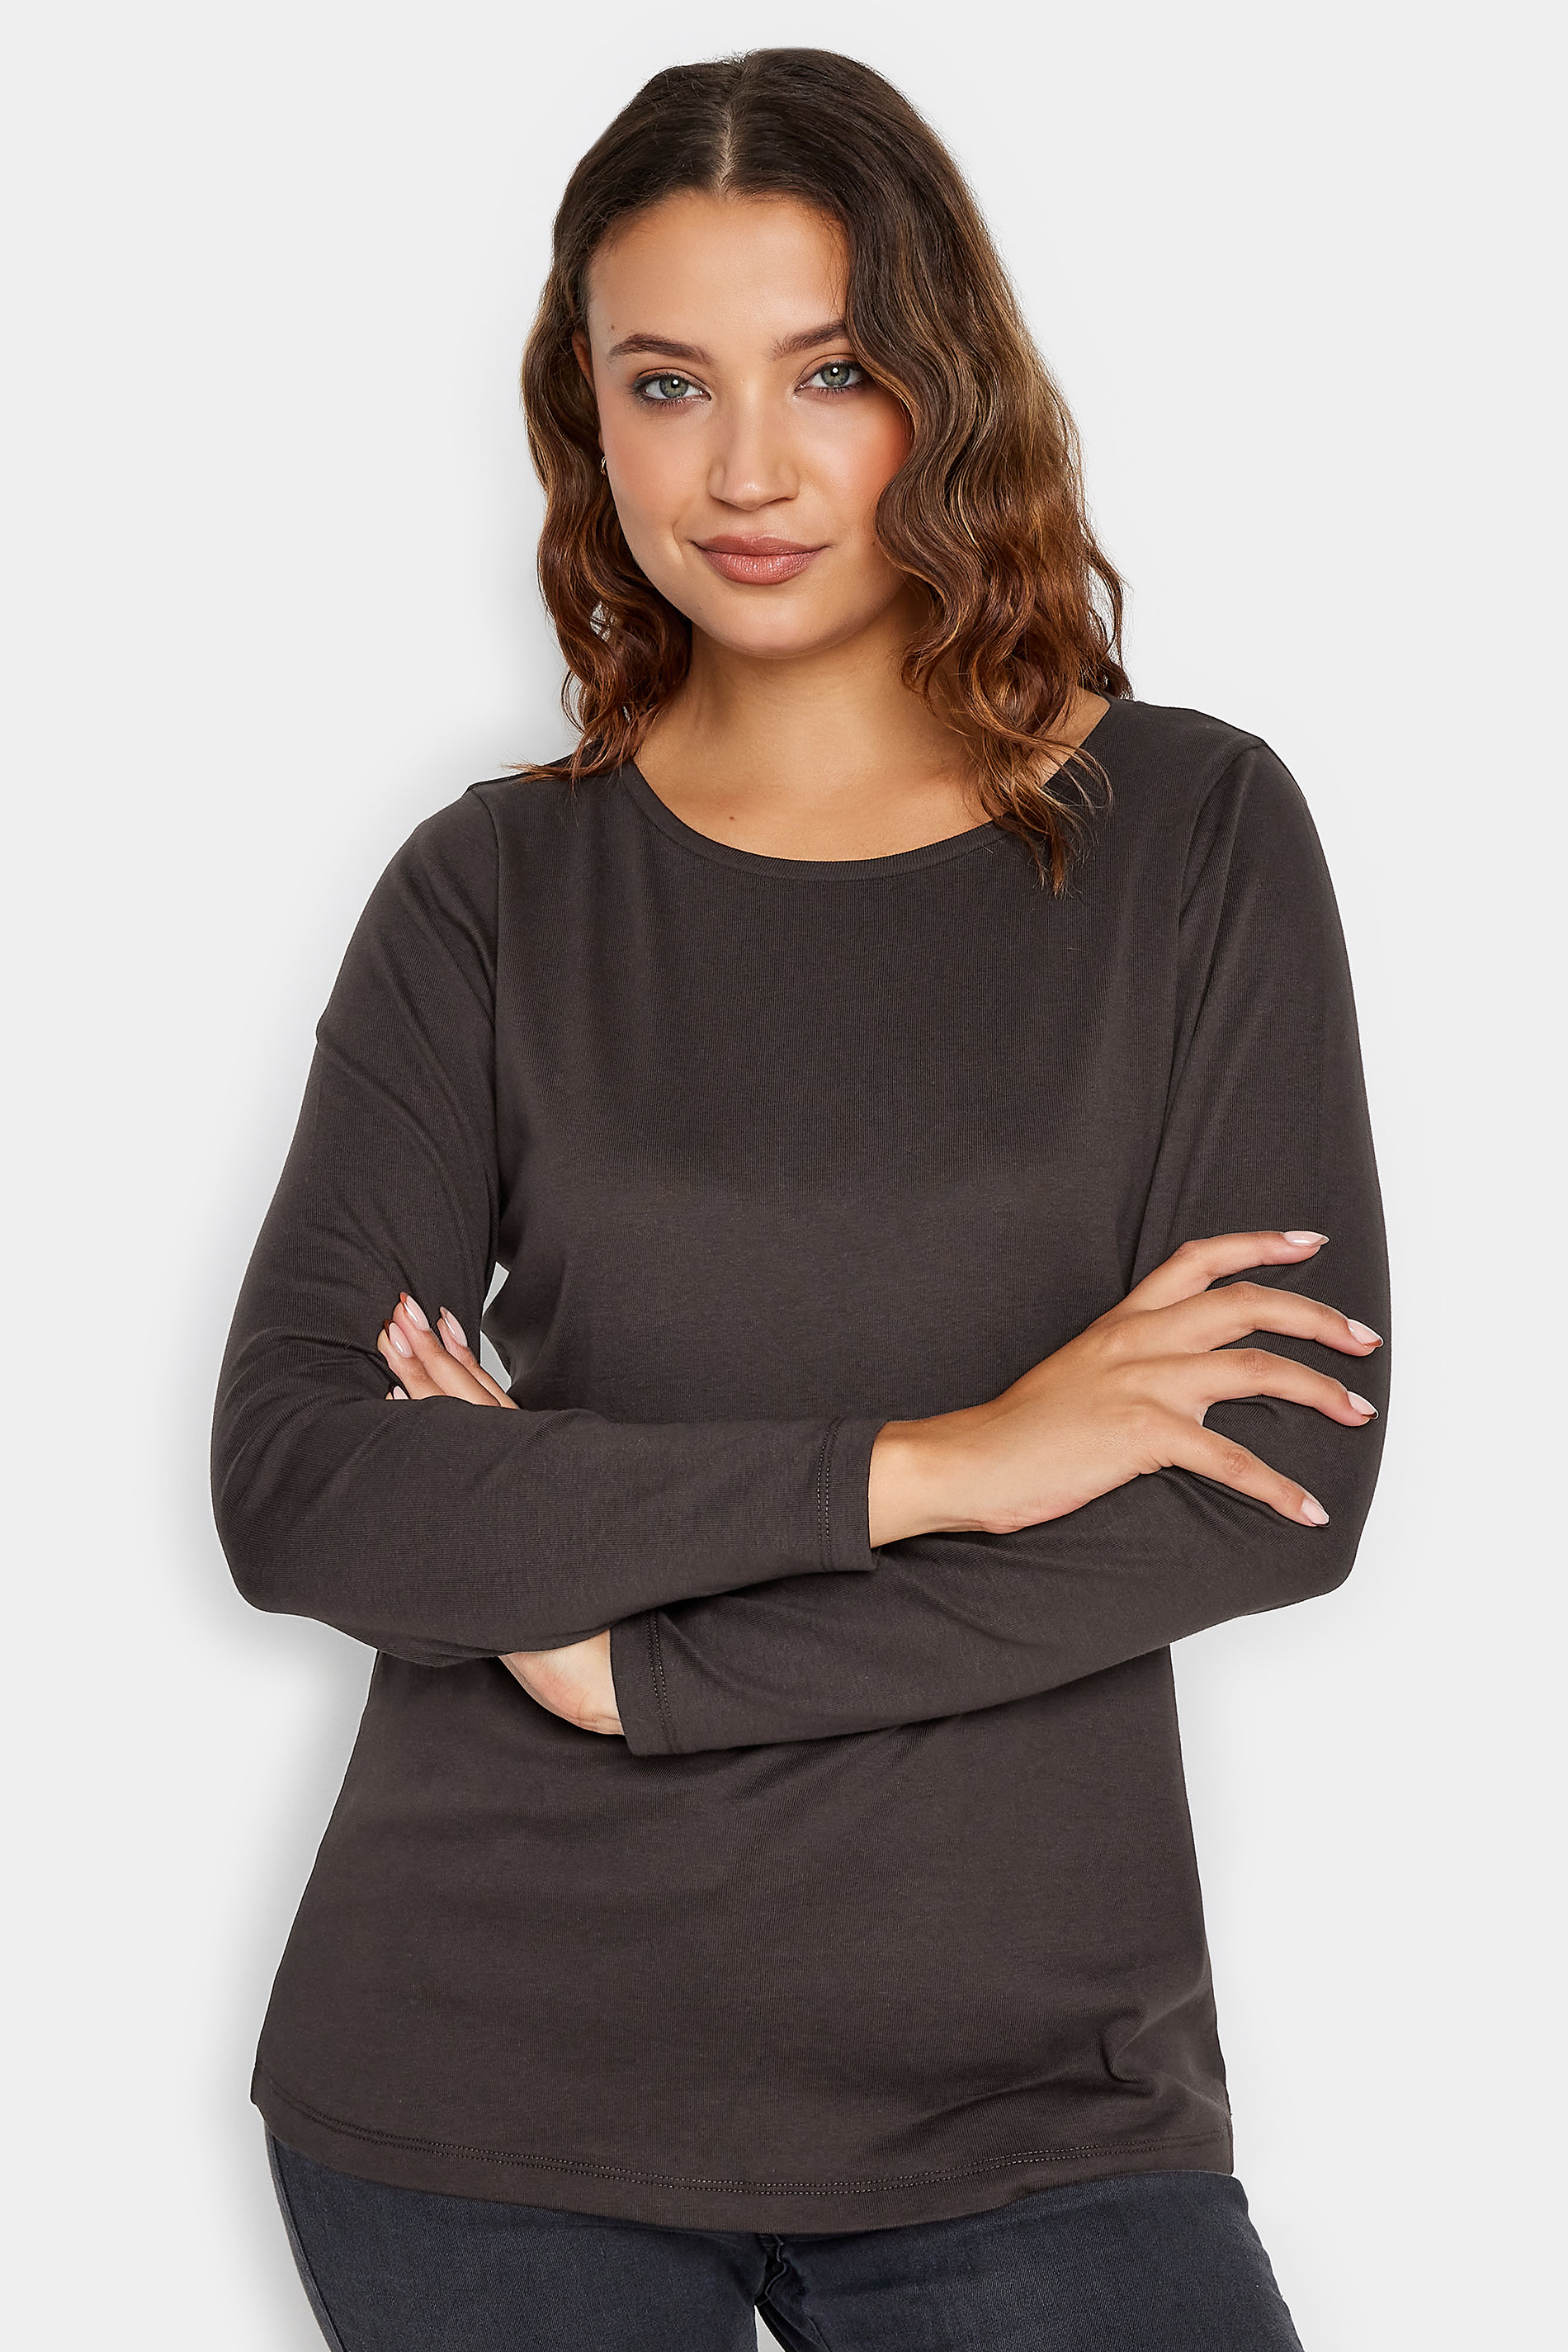 LTS Tall Dark Brown Long Sleeve Cotton T-Shirt | Long Tall Sally  1